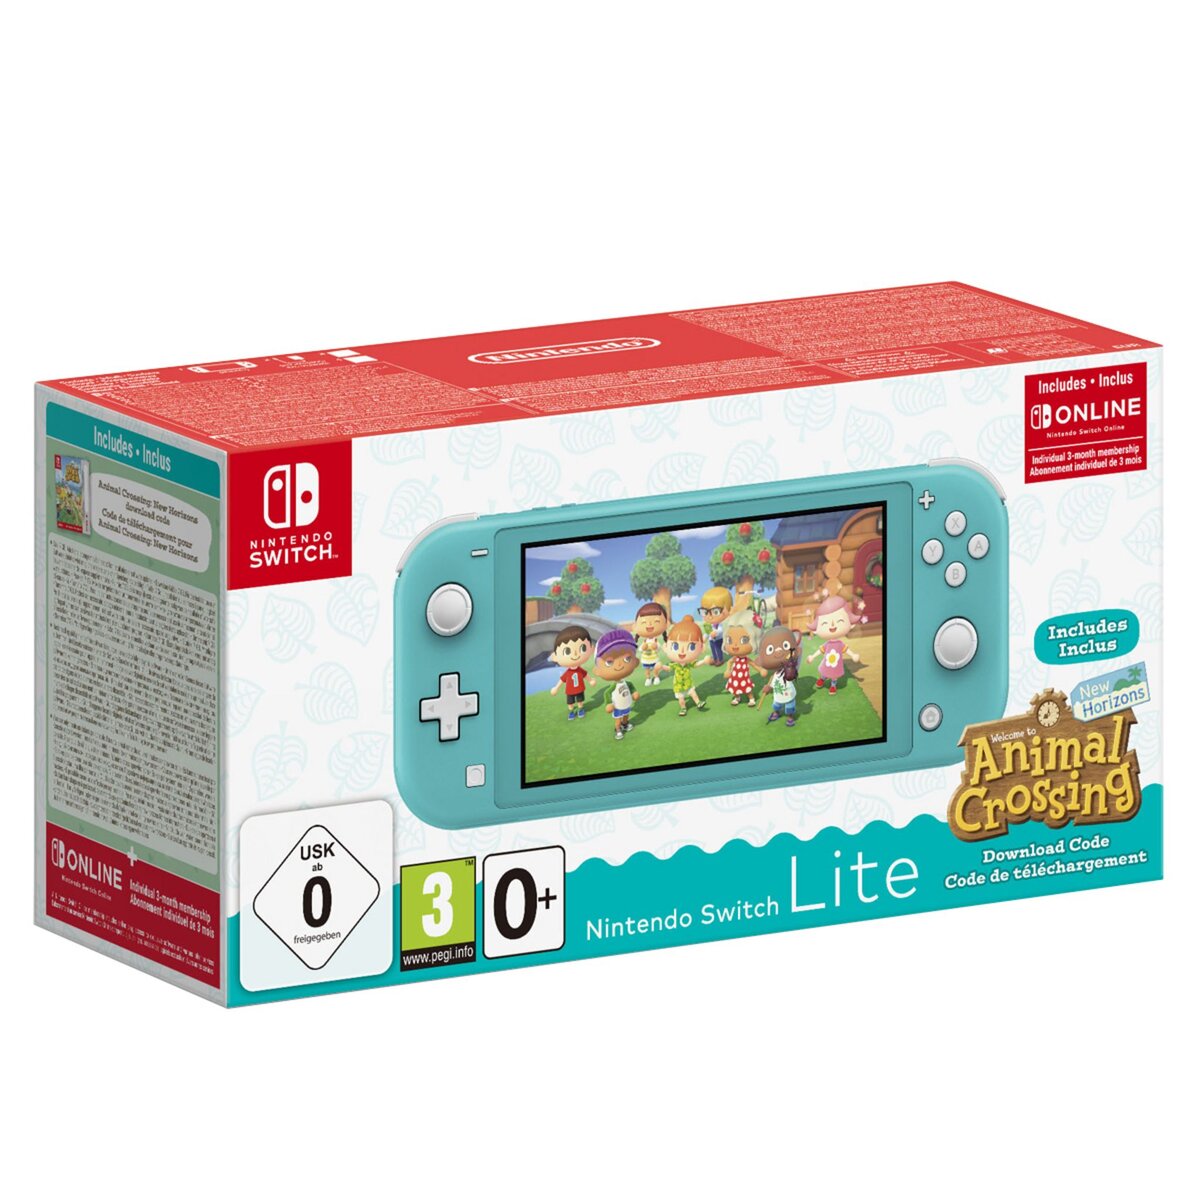 NINTENDO Console Nintendo Switch Lite Turquoise + Animal Crossing New Horizons Nintendo Switch